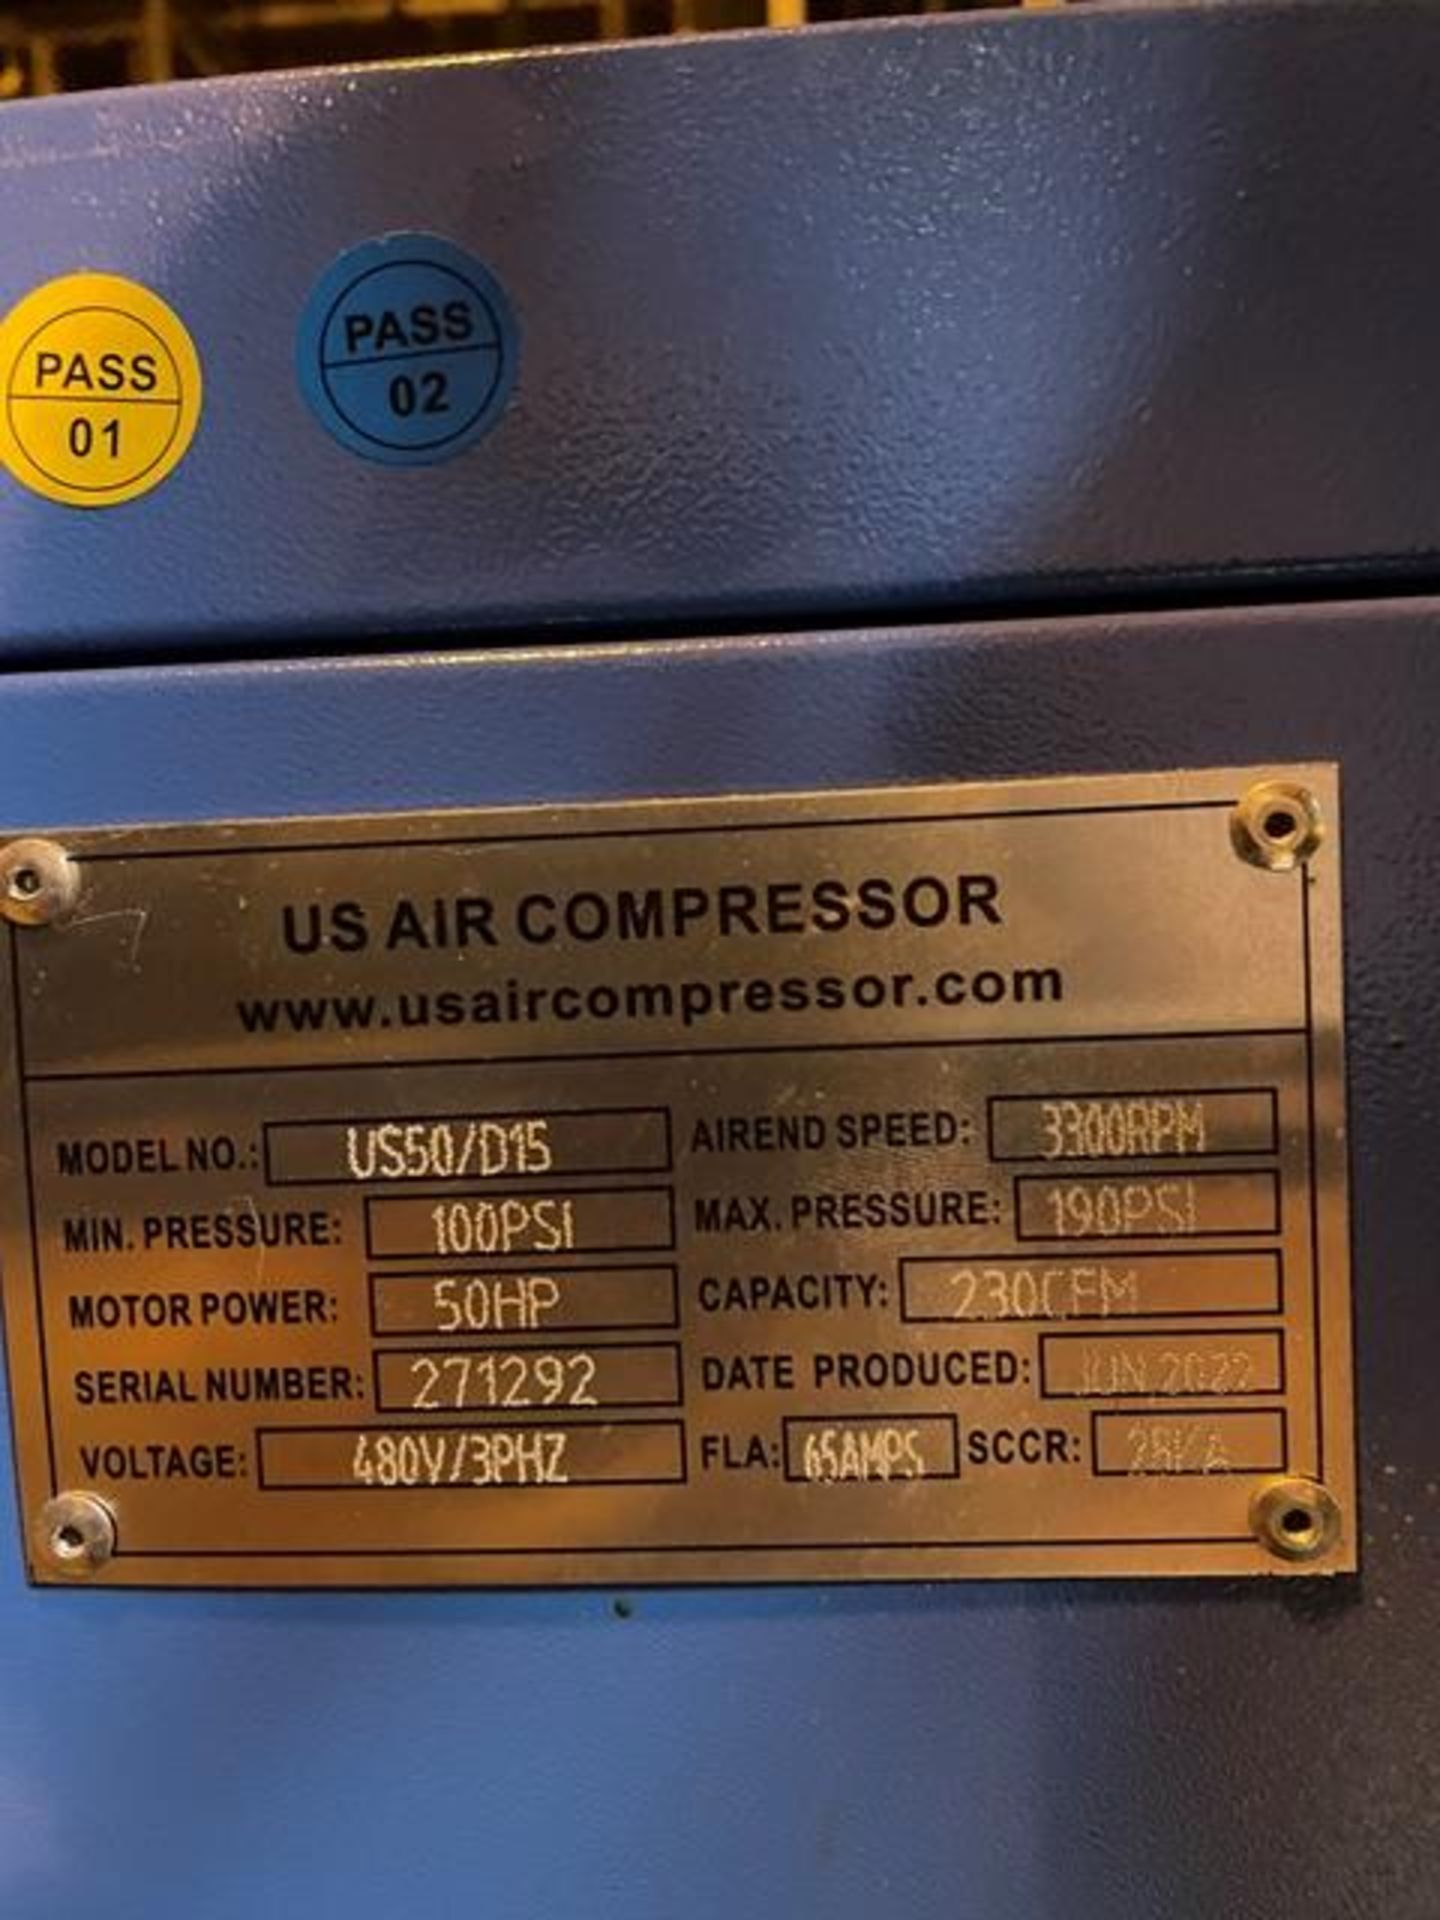 2022 US Model #US50/DI5 Rotary Screw Air Compressor, 50 HP Motor (Zero Hours), Rigging Fee - $800 - Image 2 of 3